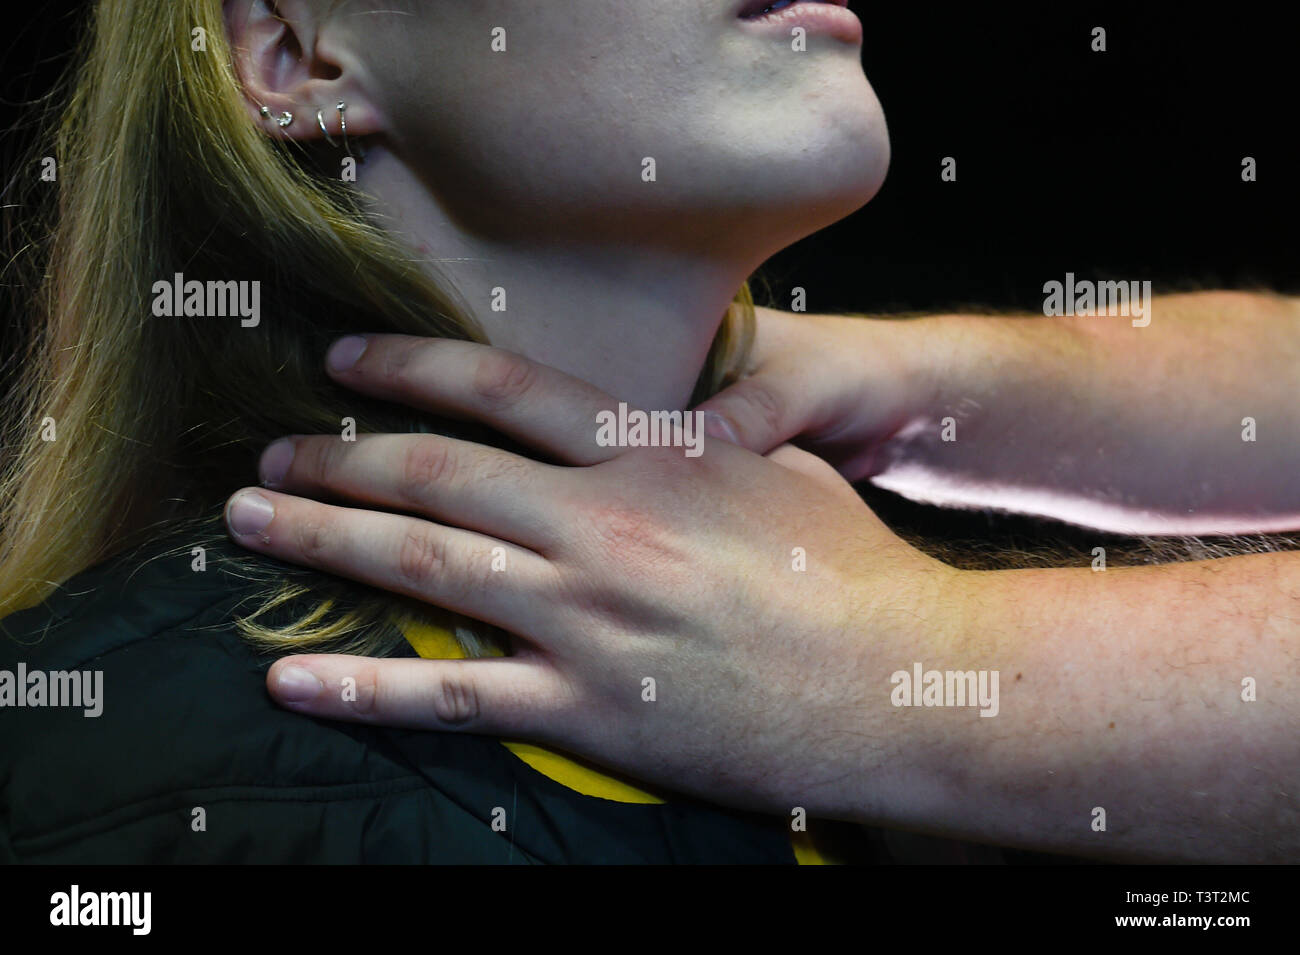 Domestic violence: man's hands choking a woman Stock Photo